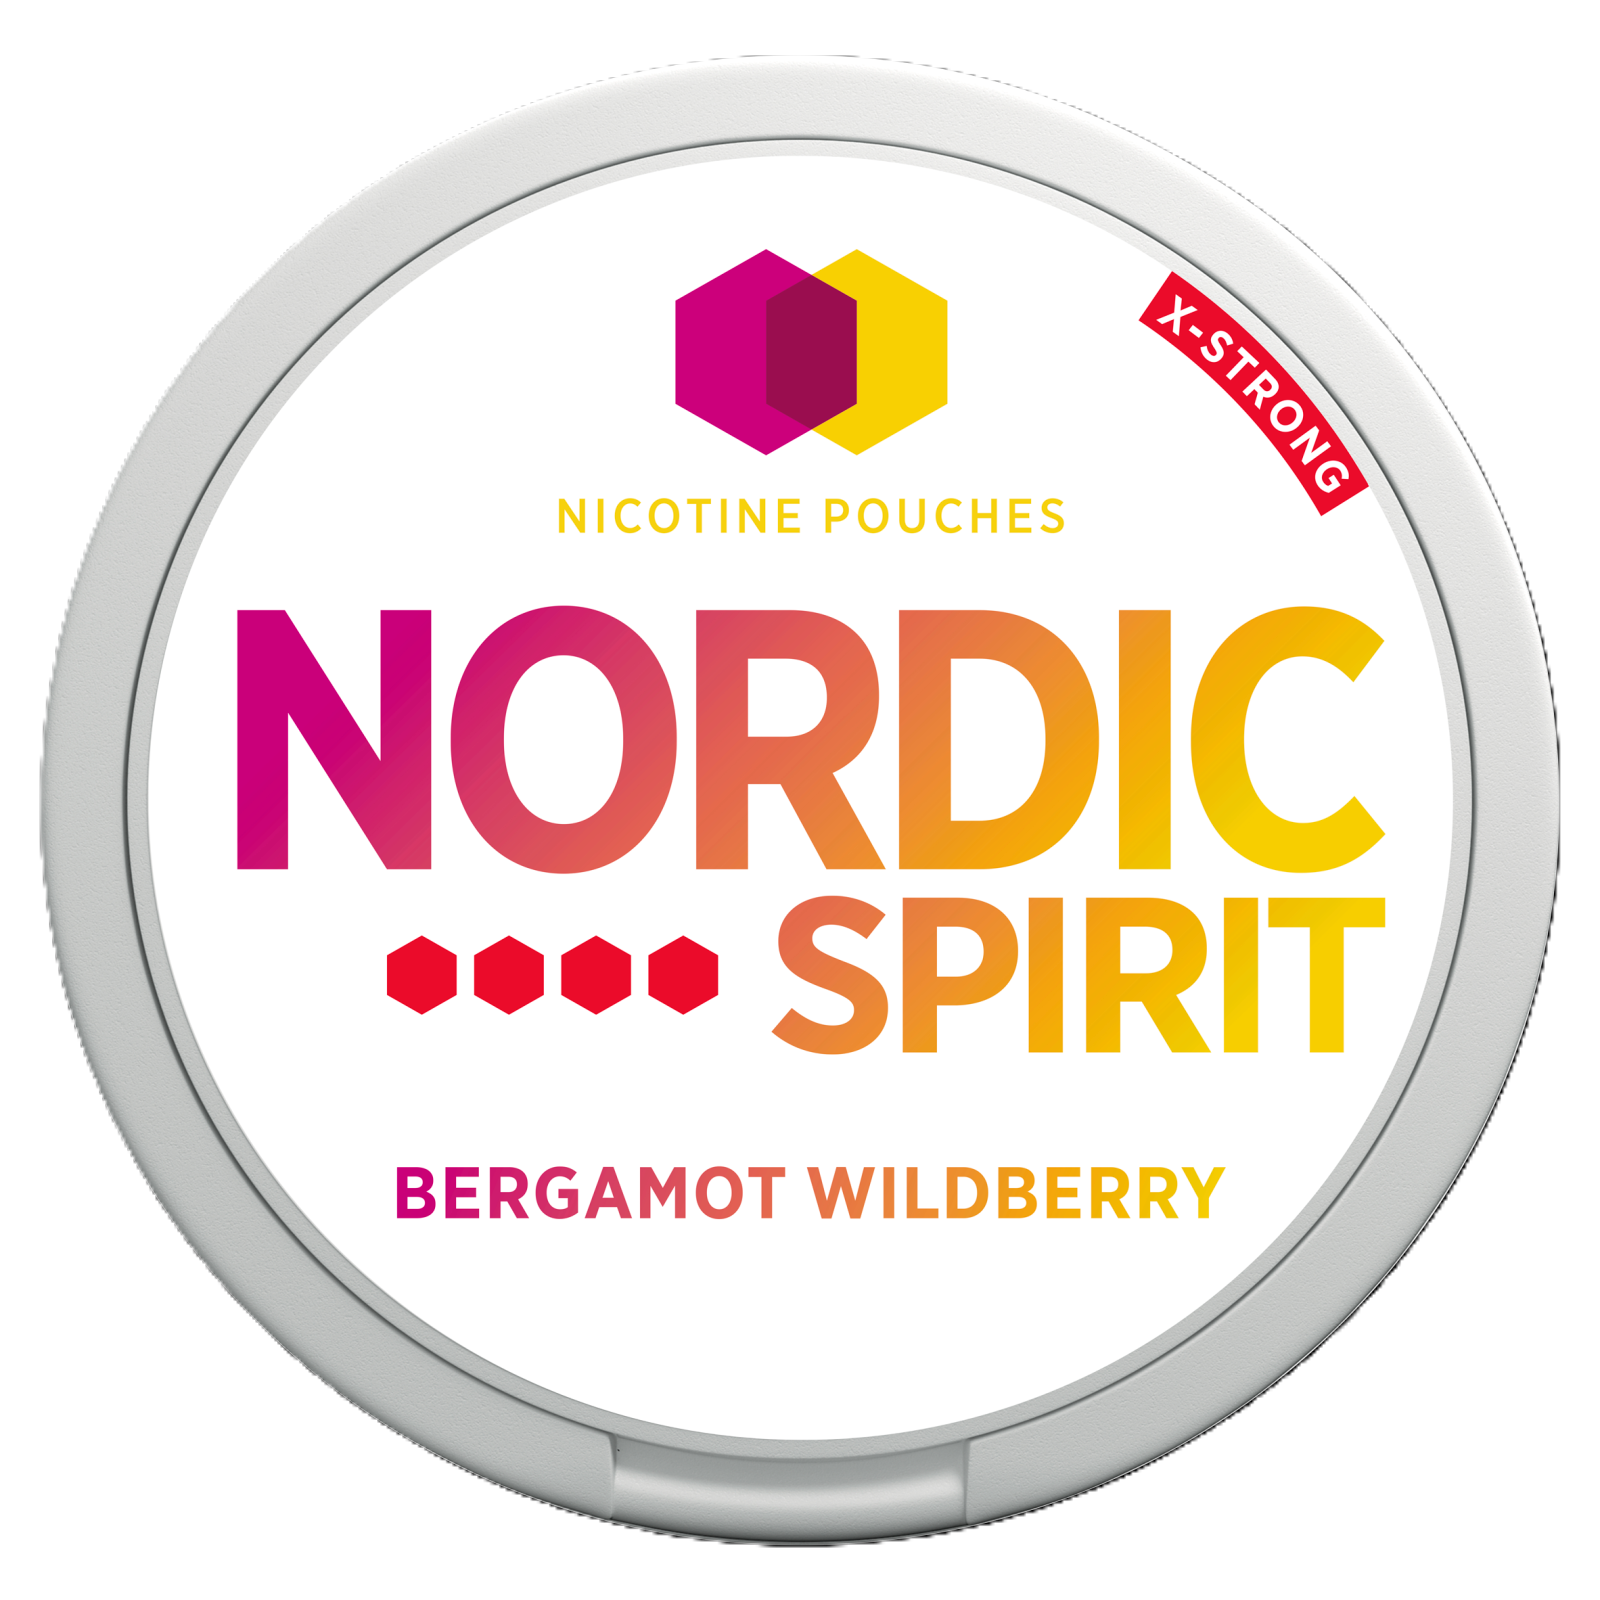 Nordic Spirit Bergamot Wildberry Extra Strong Nicotine Pouches (11mg), 20pcs